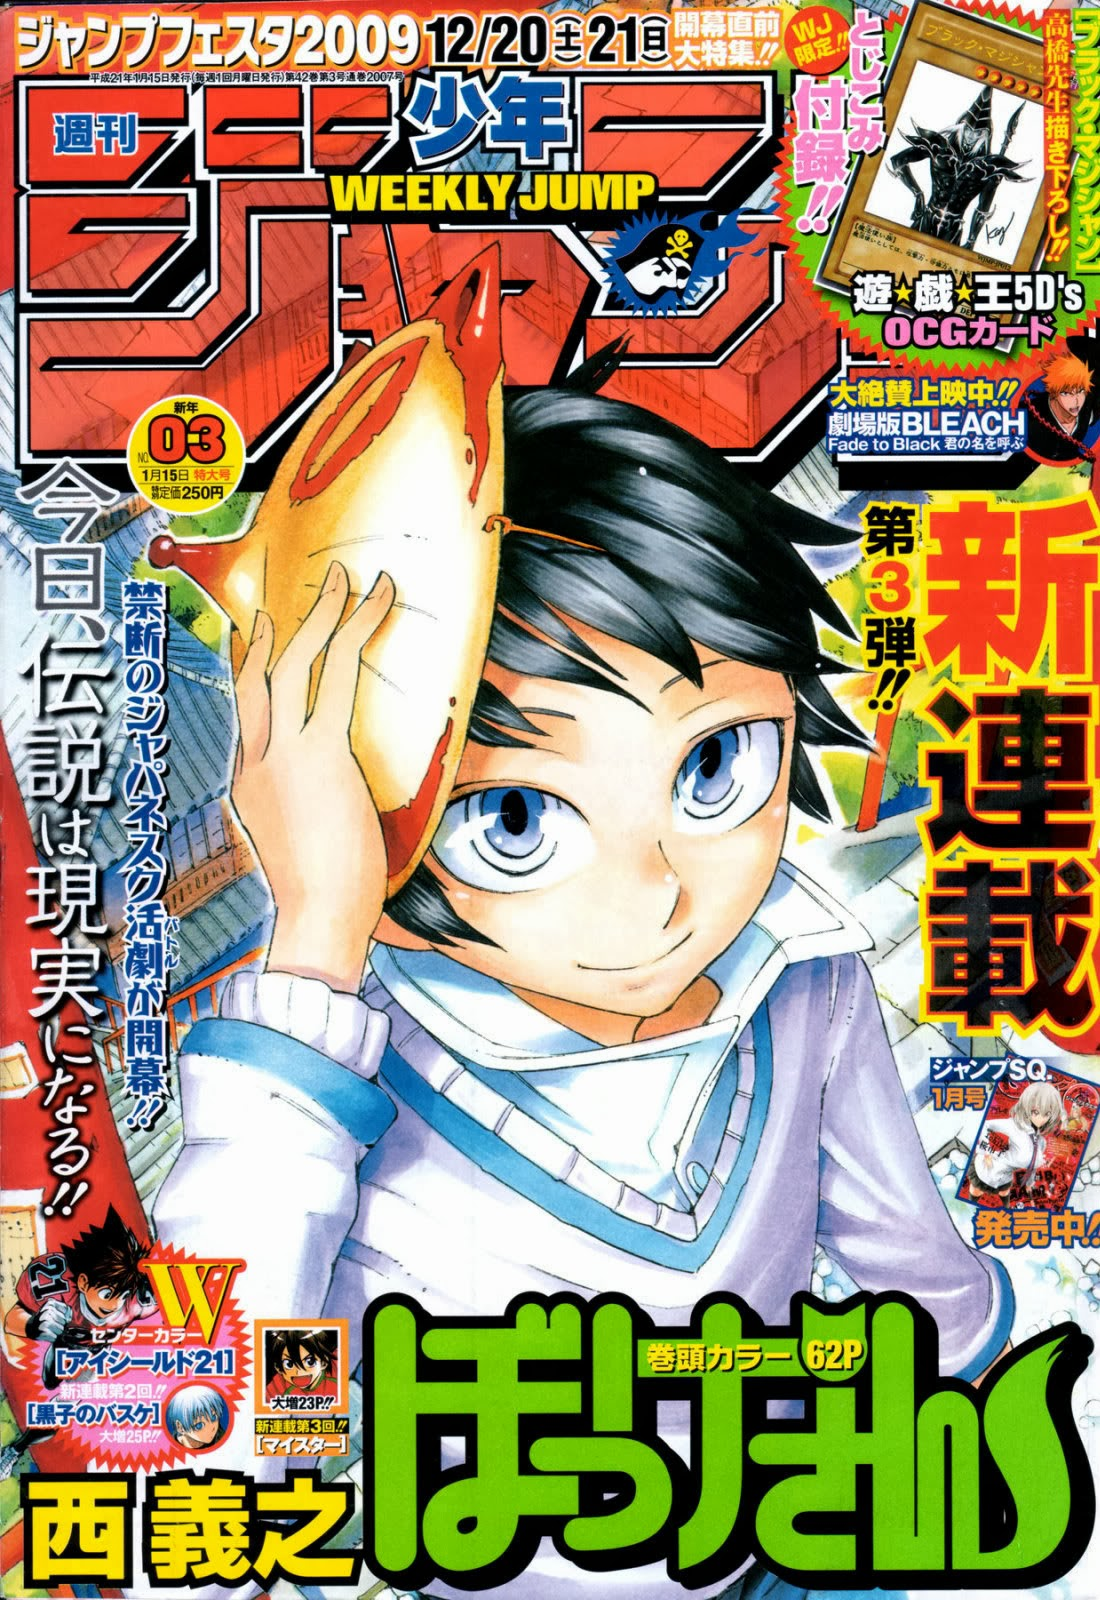 Weekly Shōnen Jump 2009, Issue 3 promotional card - Yugipedia - Yu 